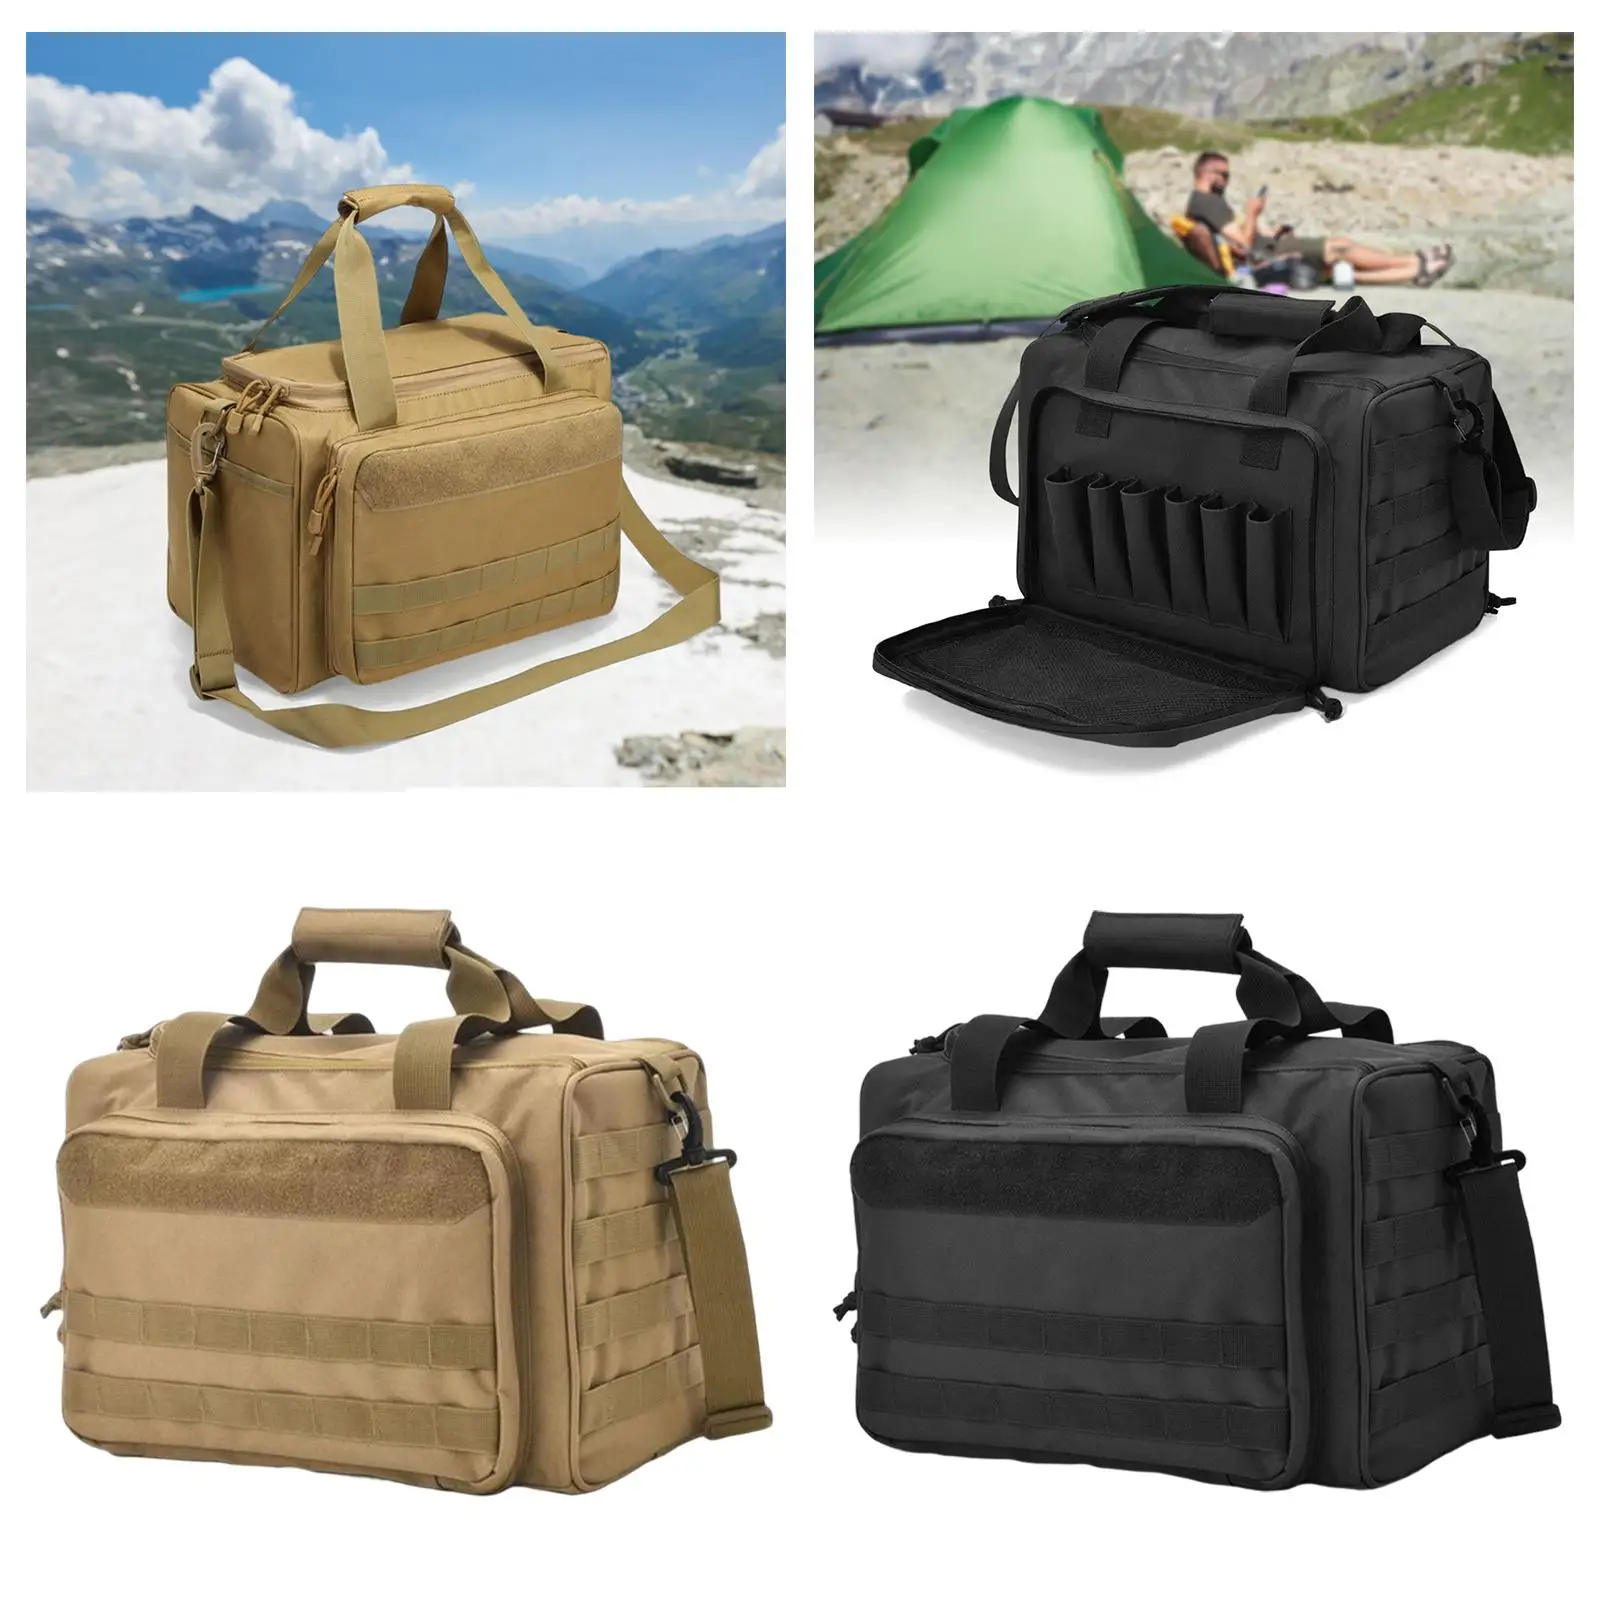 Range Bag Handbag Large Capacity Luggage Bag Tote  Outdoor  Resistant Shoulder Bag Travel Duffel Bag for Hiking Climbing